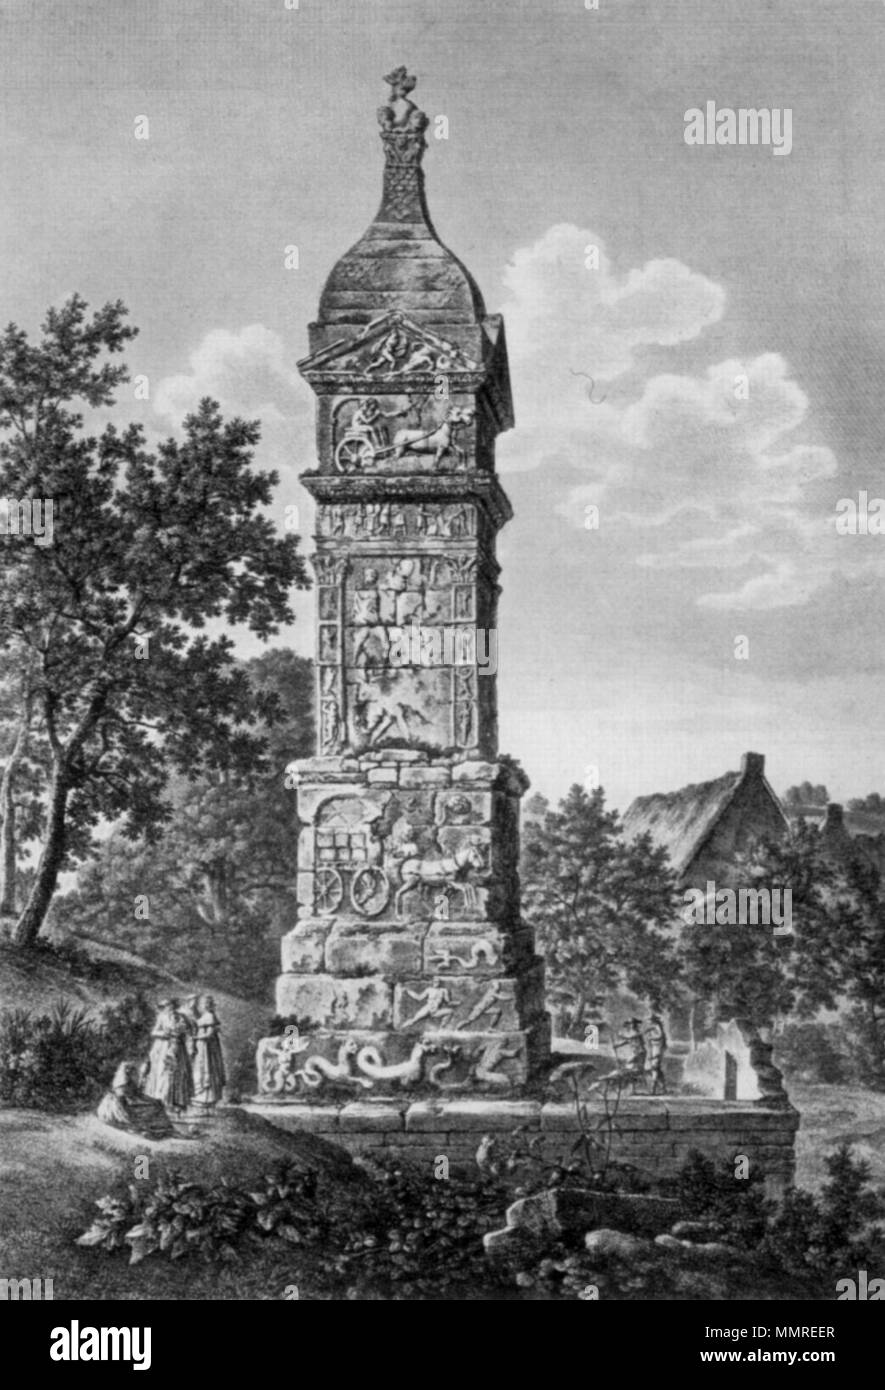 Bence, Jacques Martin Silvestre Igel (b. Trier), Römisches Pfeilergrabmal (sog. Igeler Säule) Stock Photo